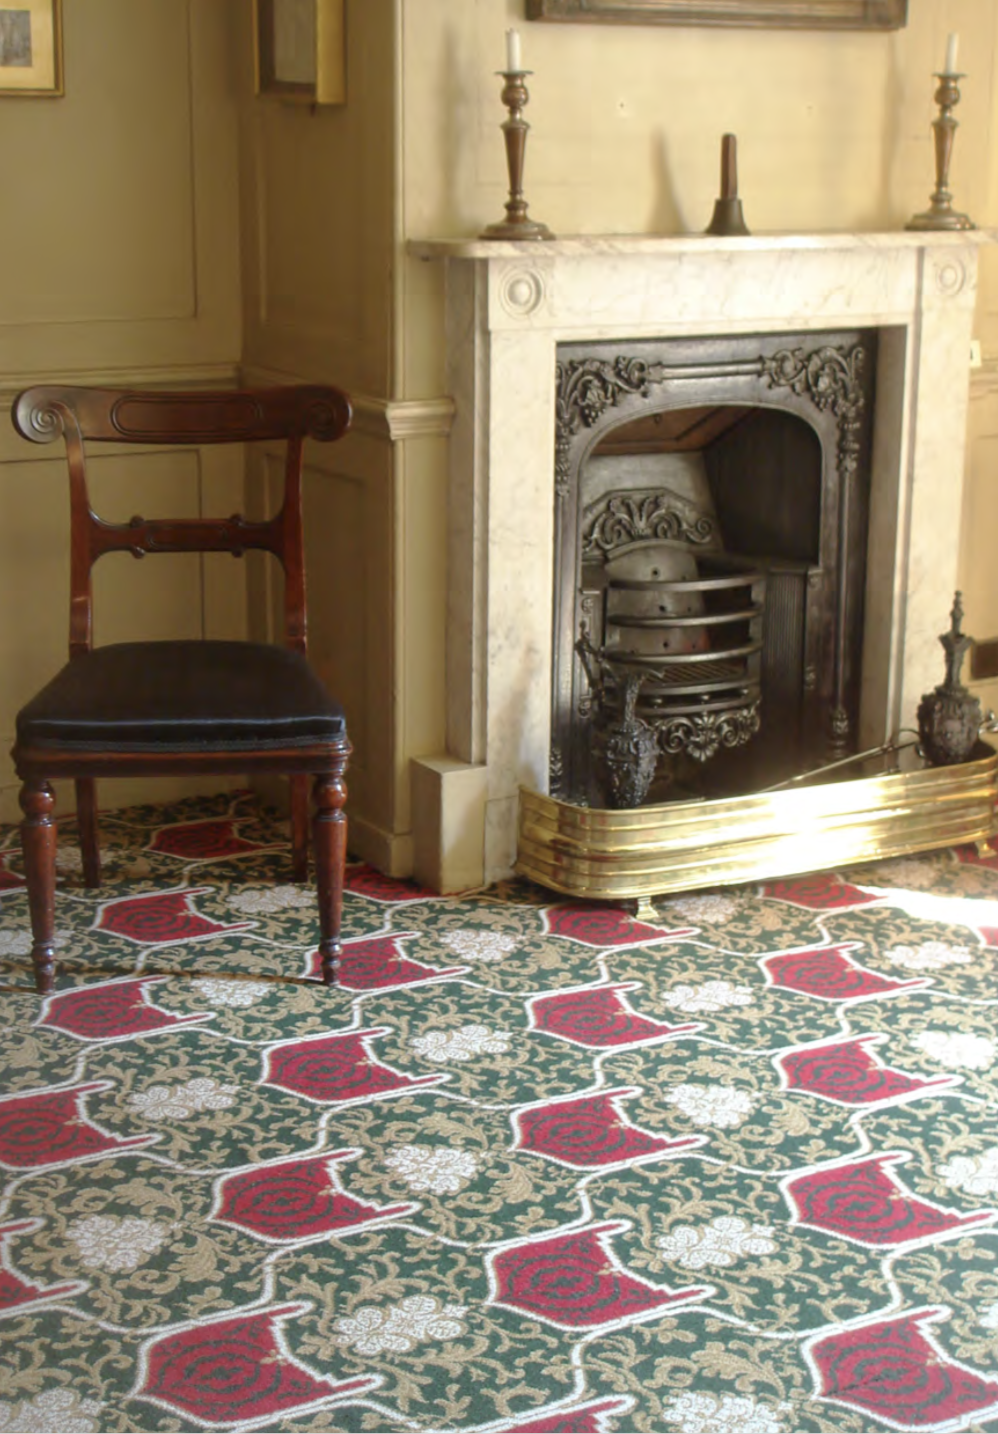 4. The new carpet installed, ©National Trust Images/Jonathan Marsh